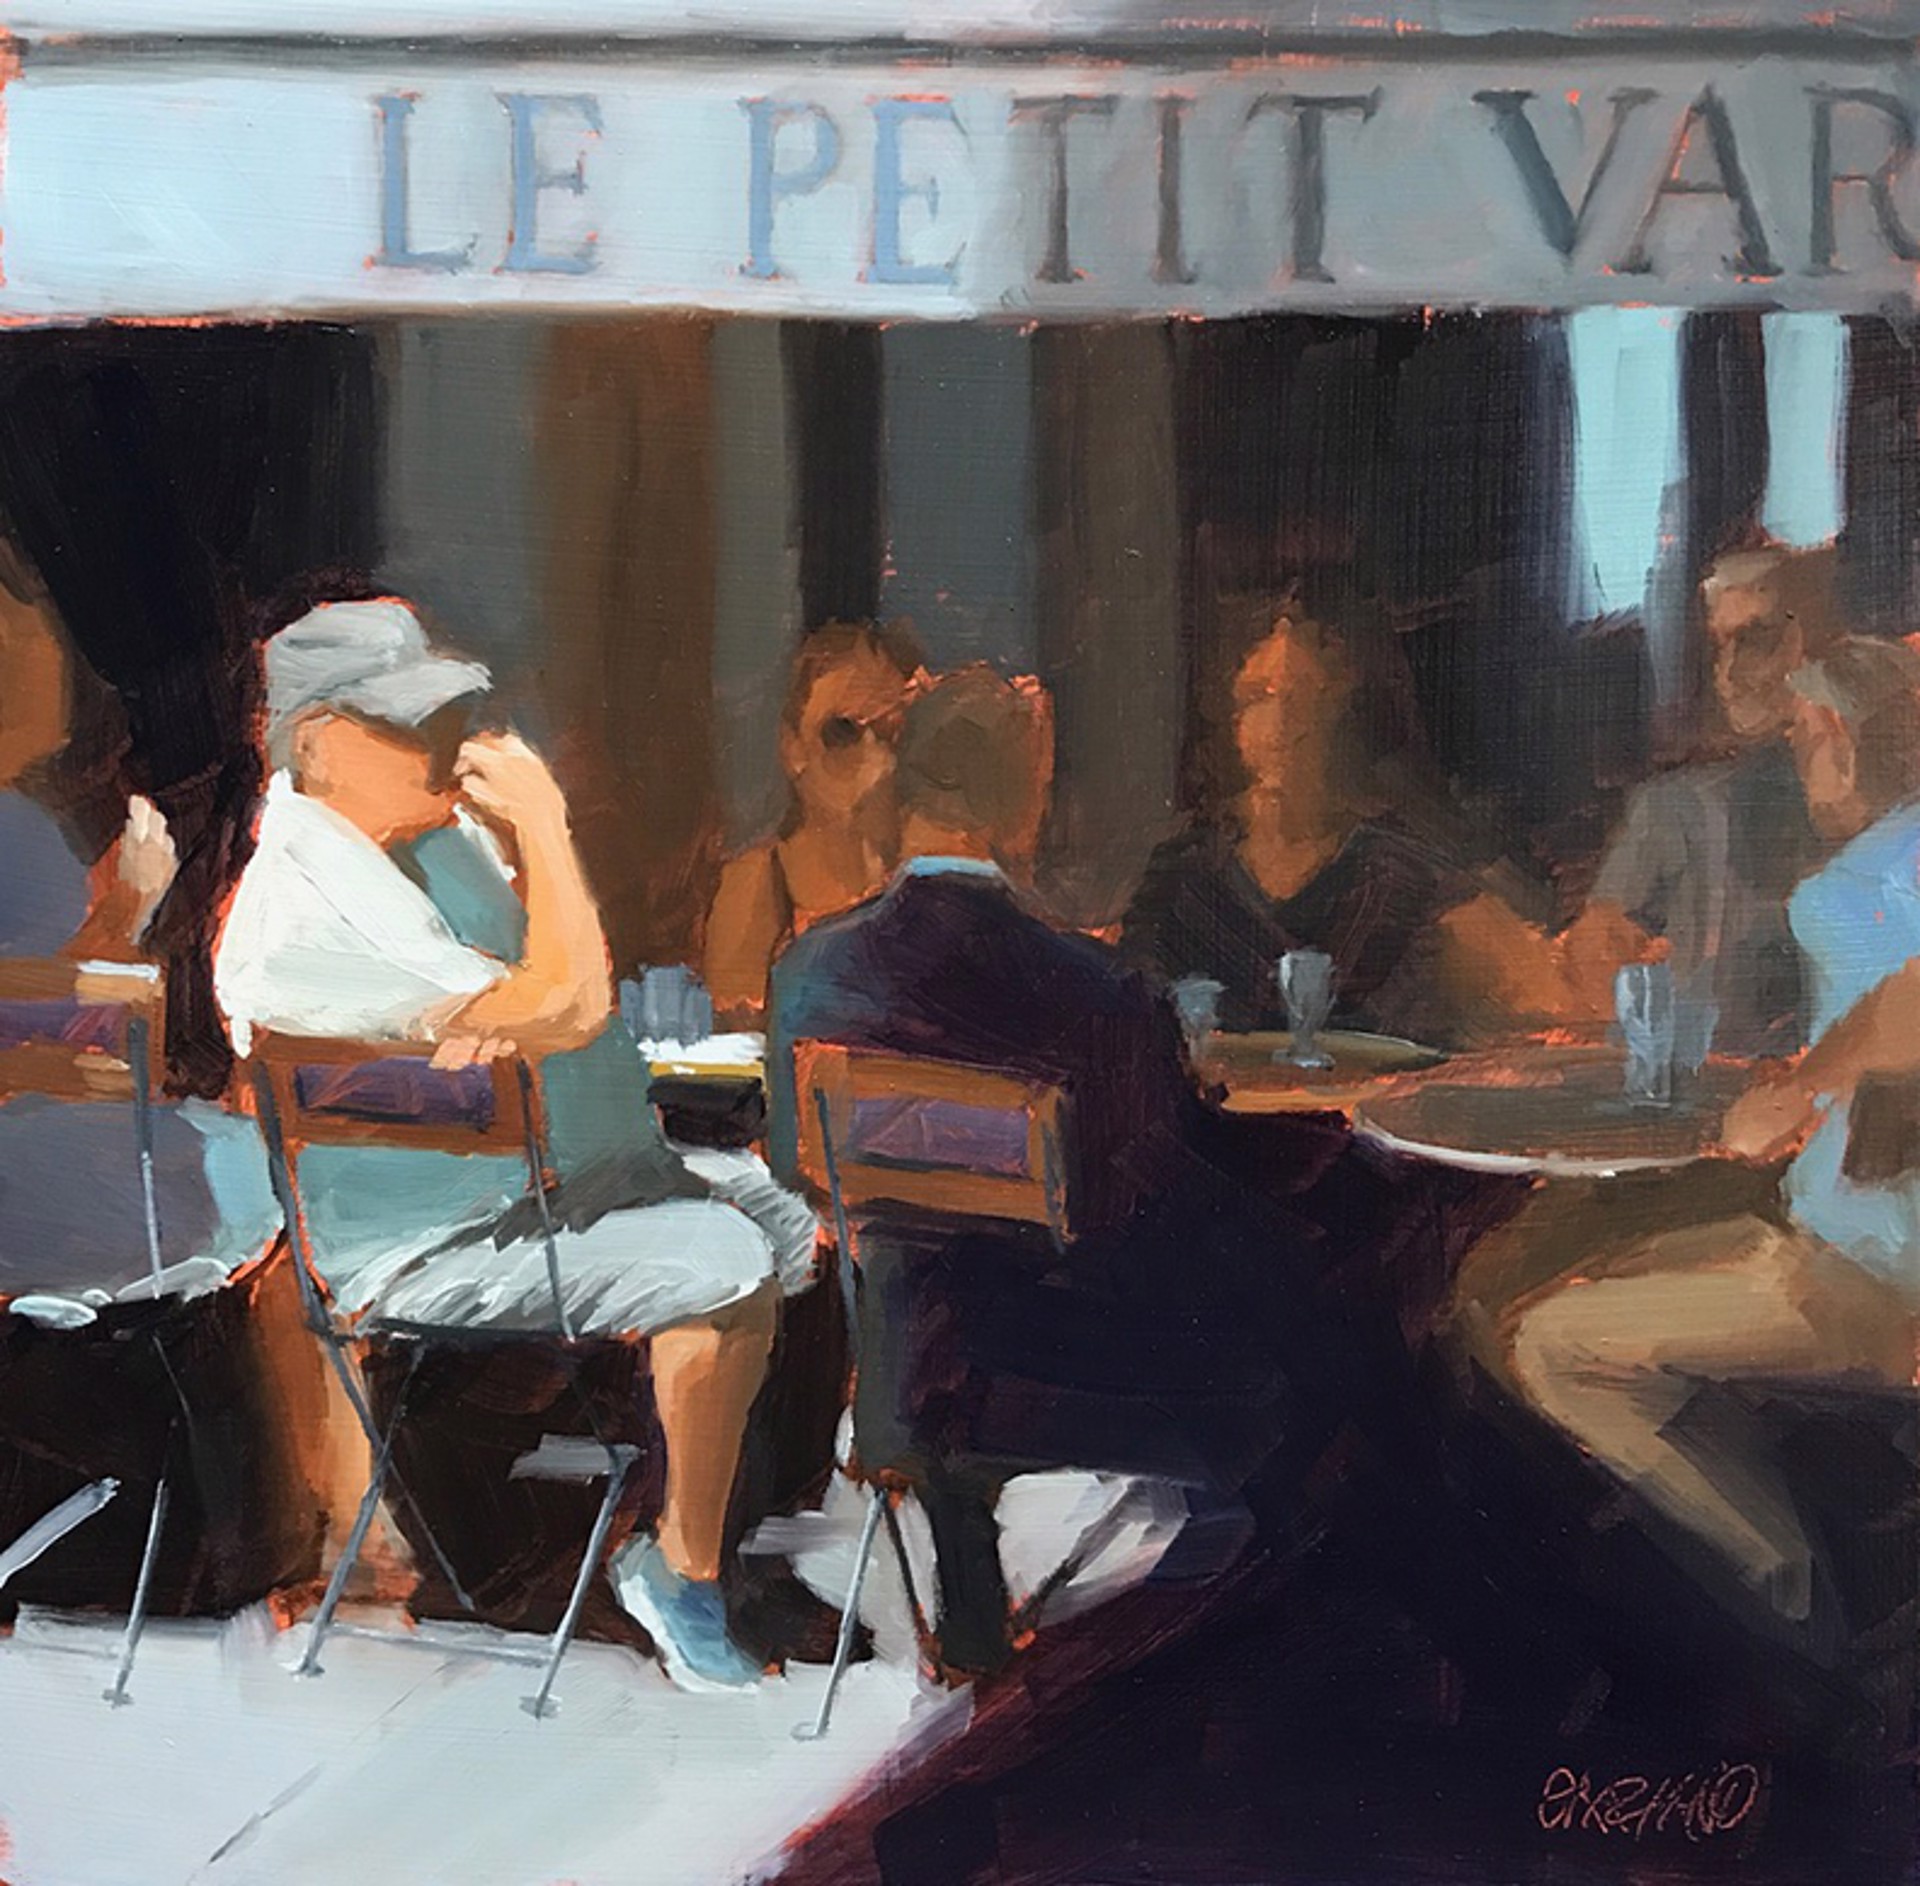 Friends at Le Petit Varenne by Dan Graziano